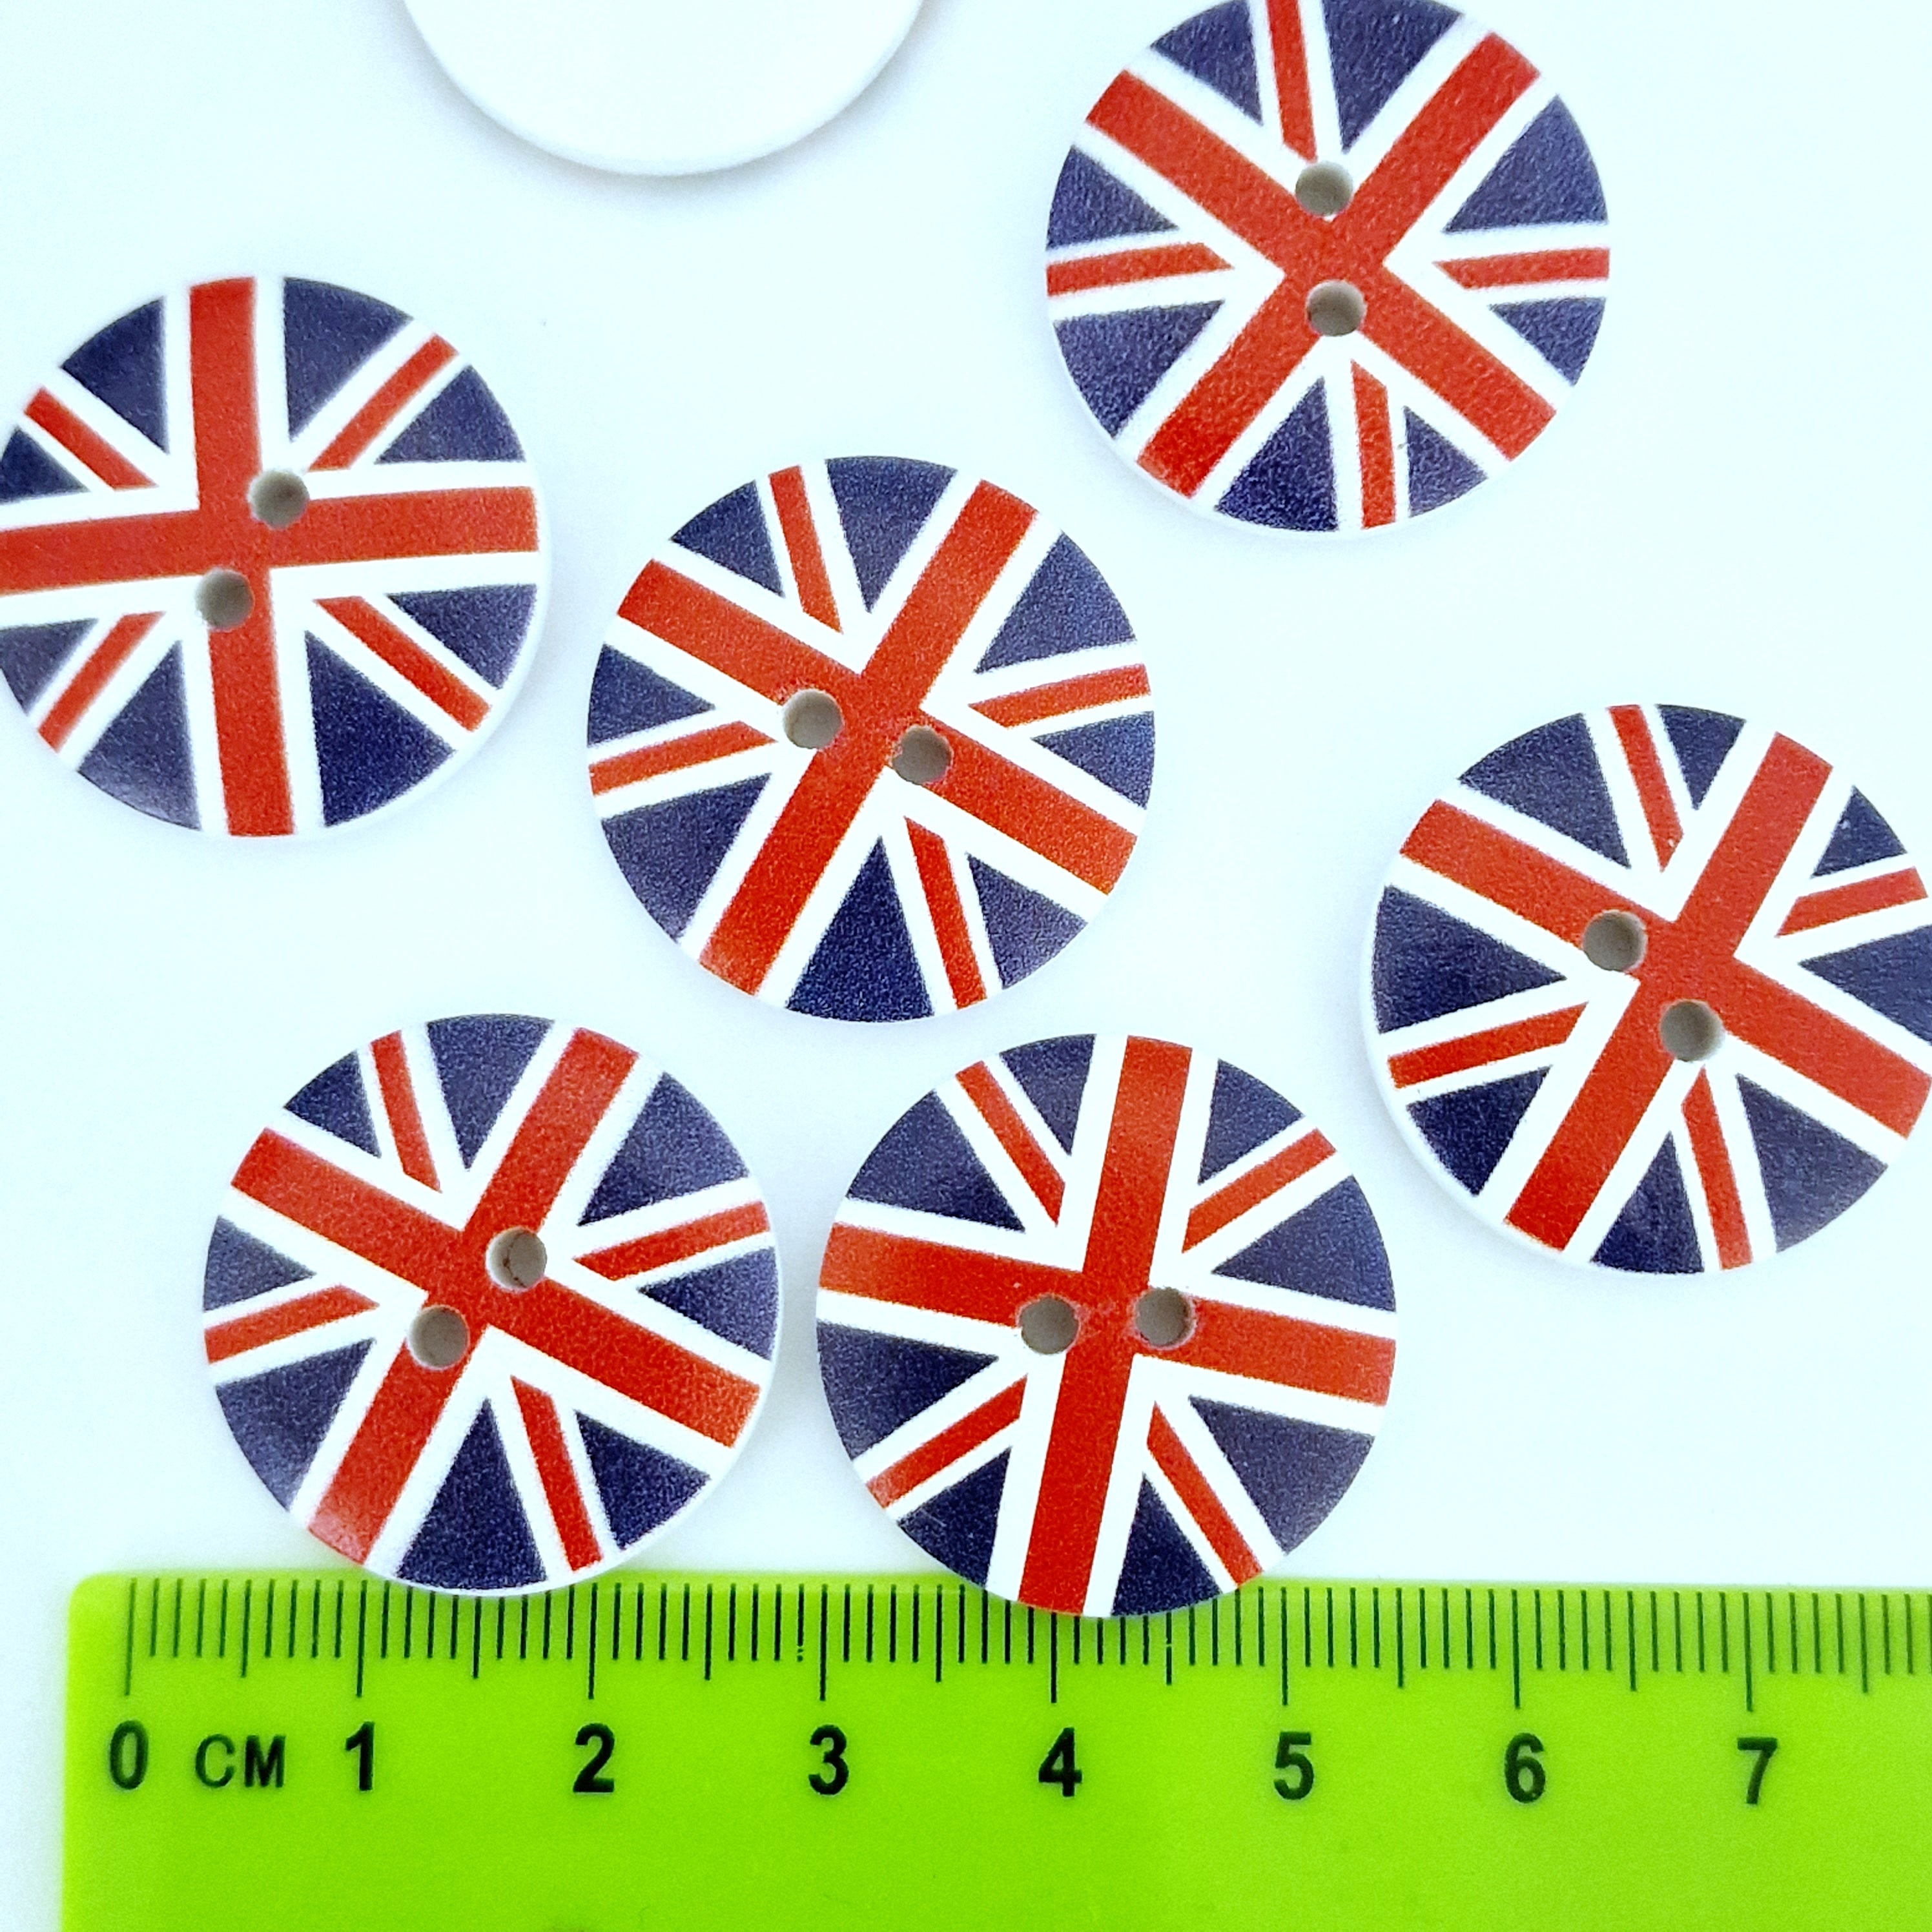 MajorCrafts 24pcs 25mm Union Jack British Flag Round 2 Holes Wood Sewing Buttons